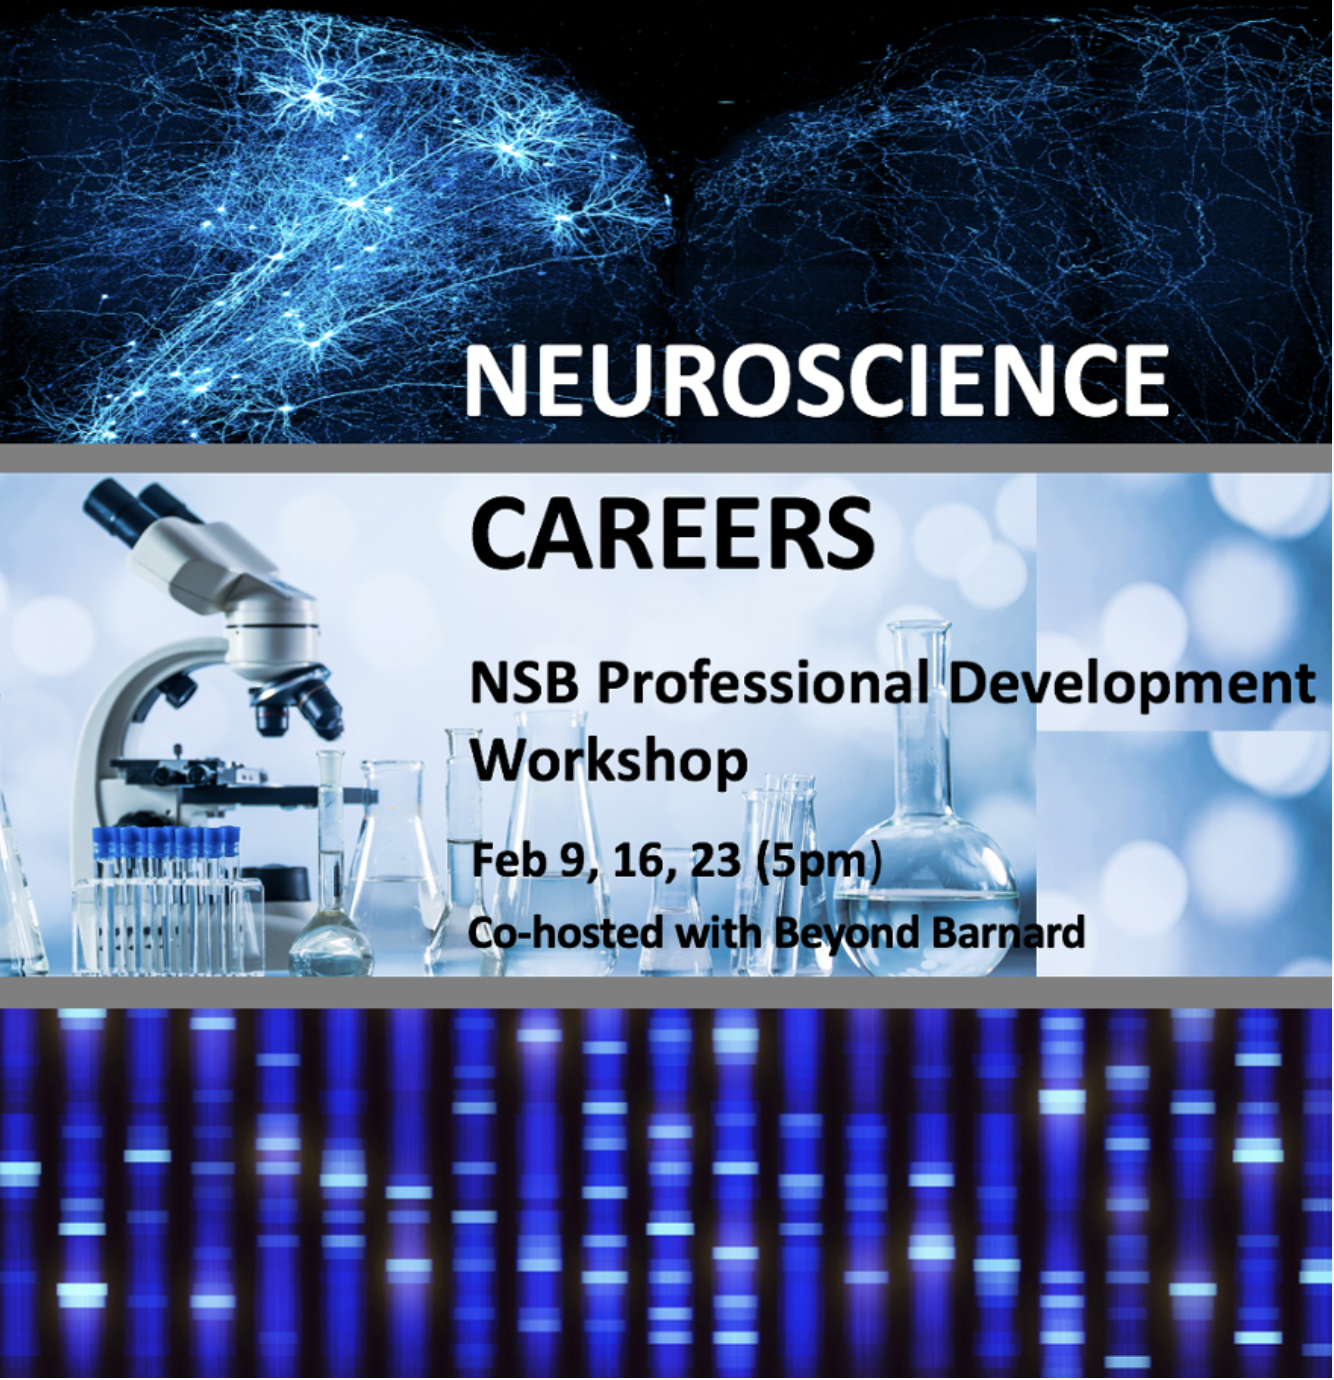 Neuroscience Careers Announcement